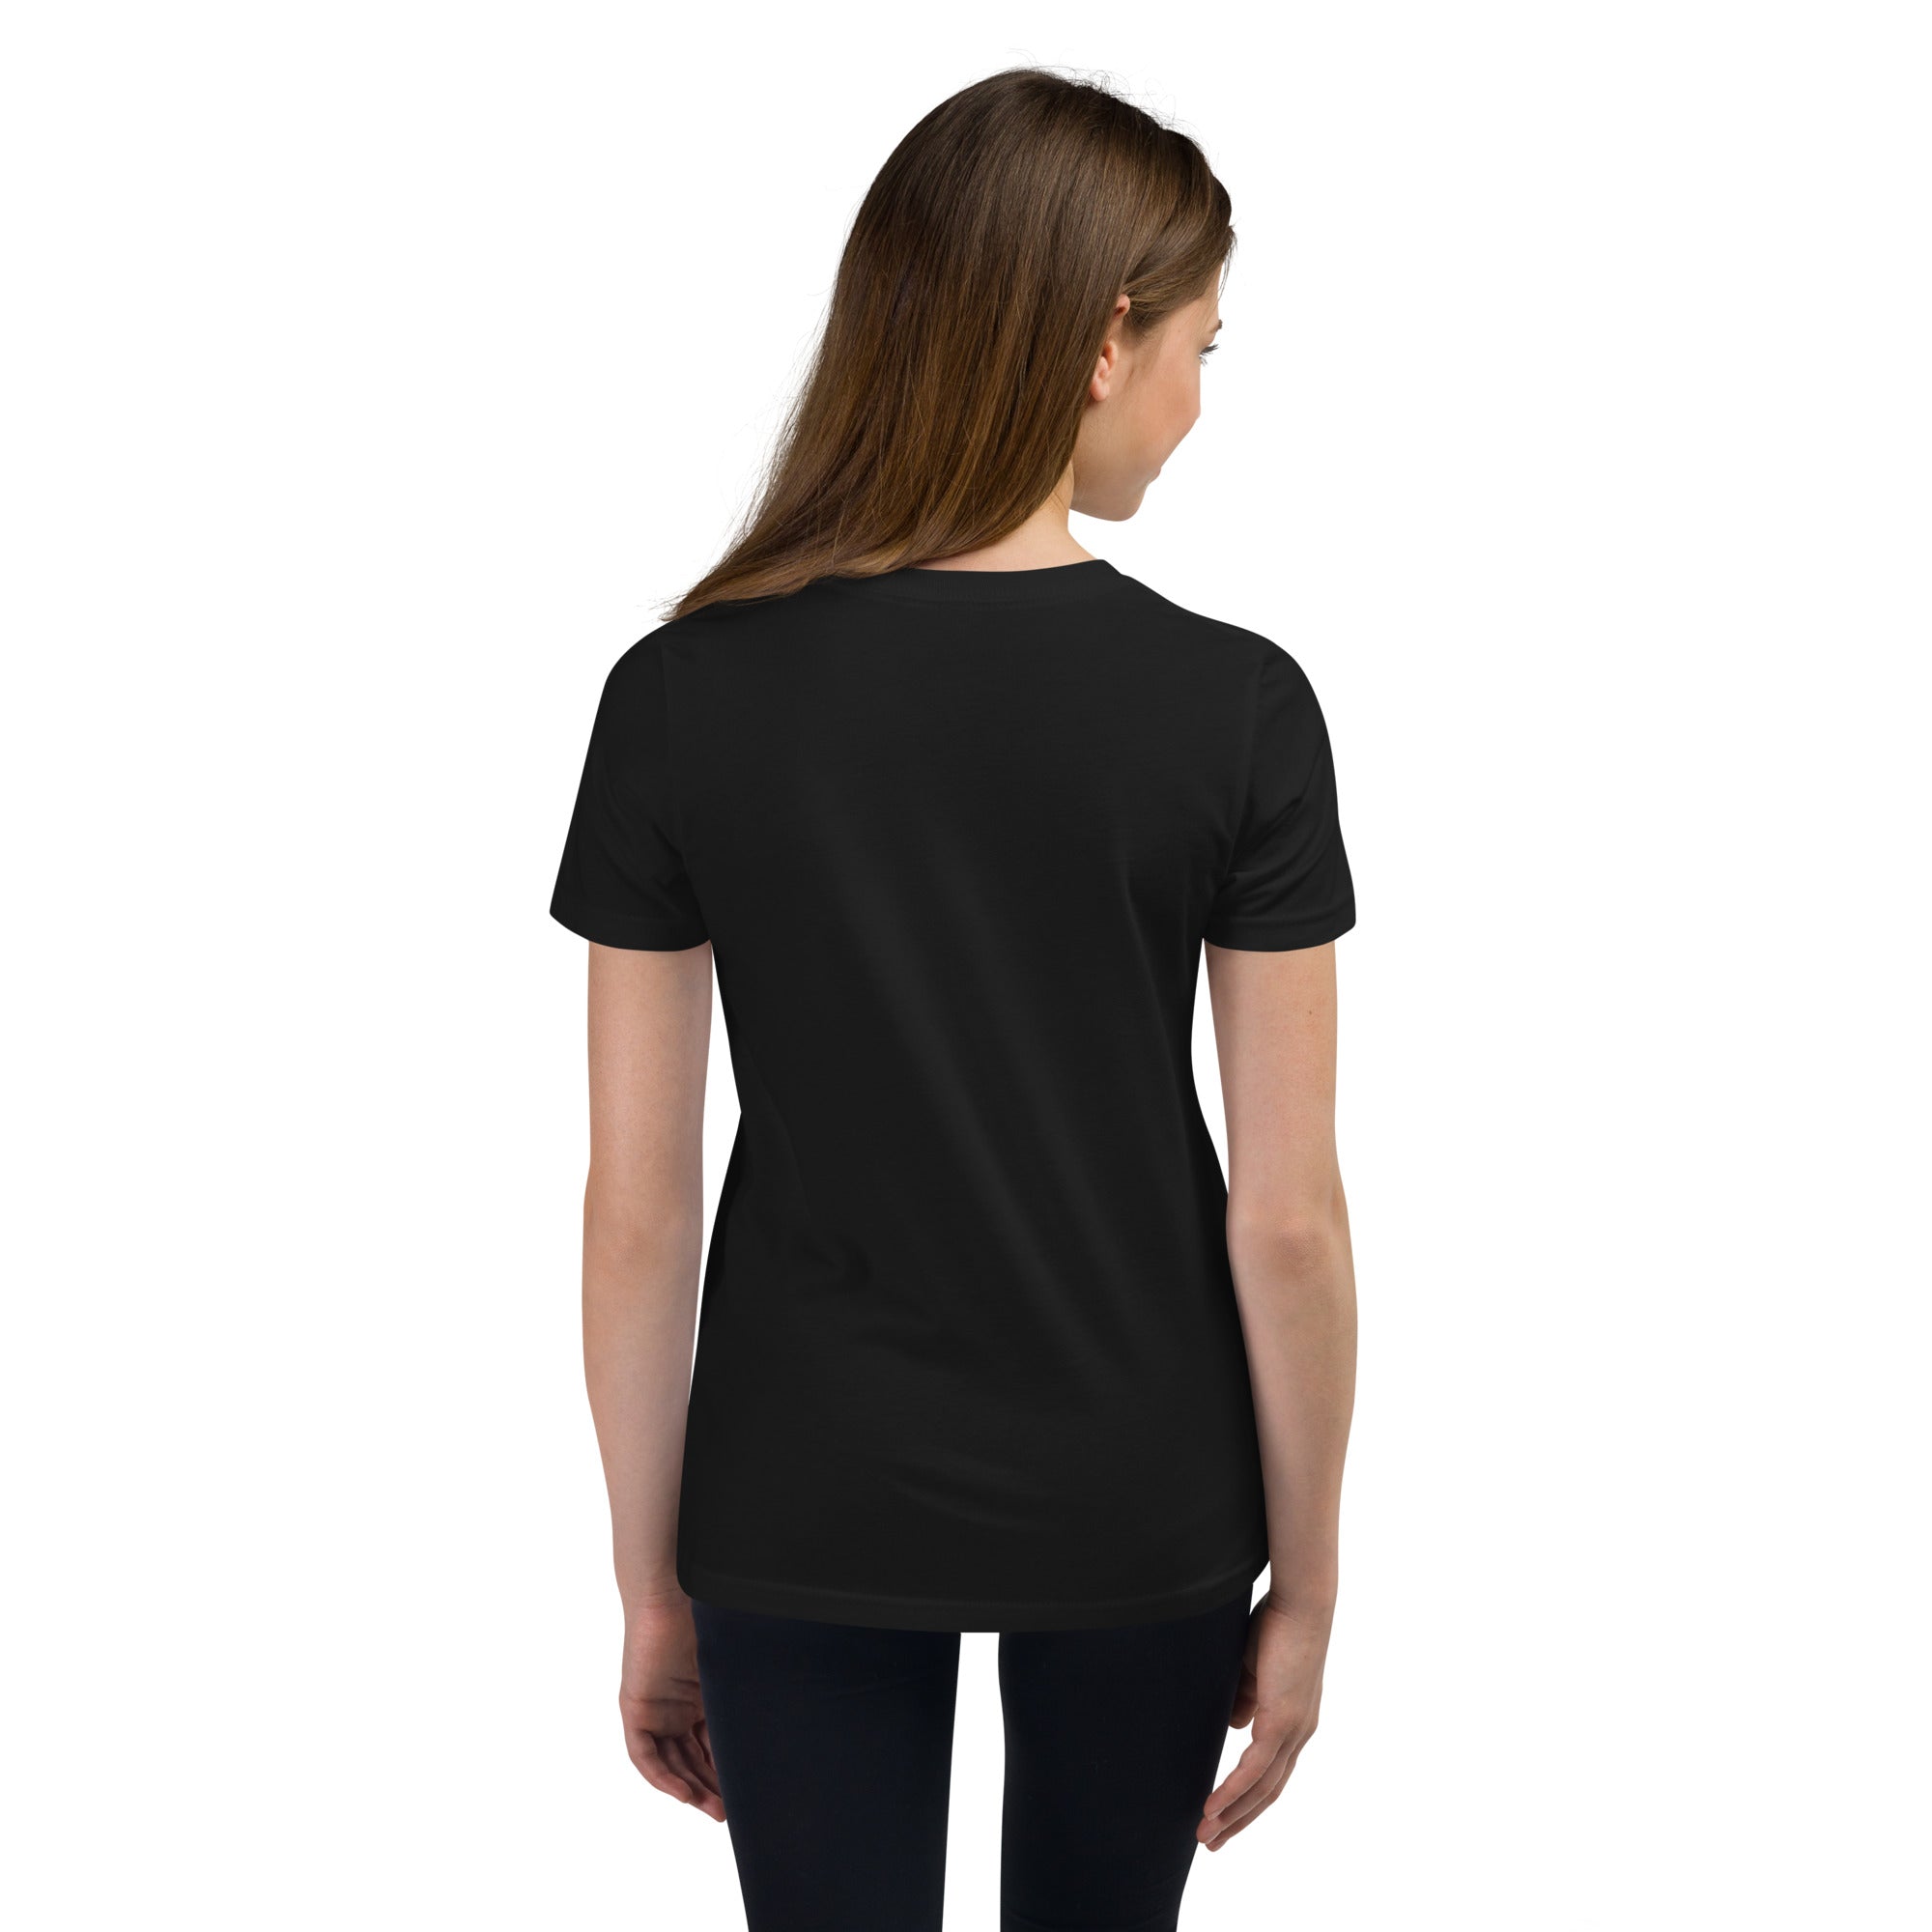 West Chester/Mason Logo R/W - Black Youth Short Sleeve T-Shirt